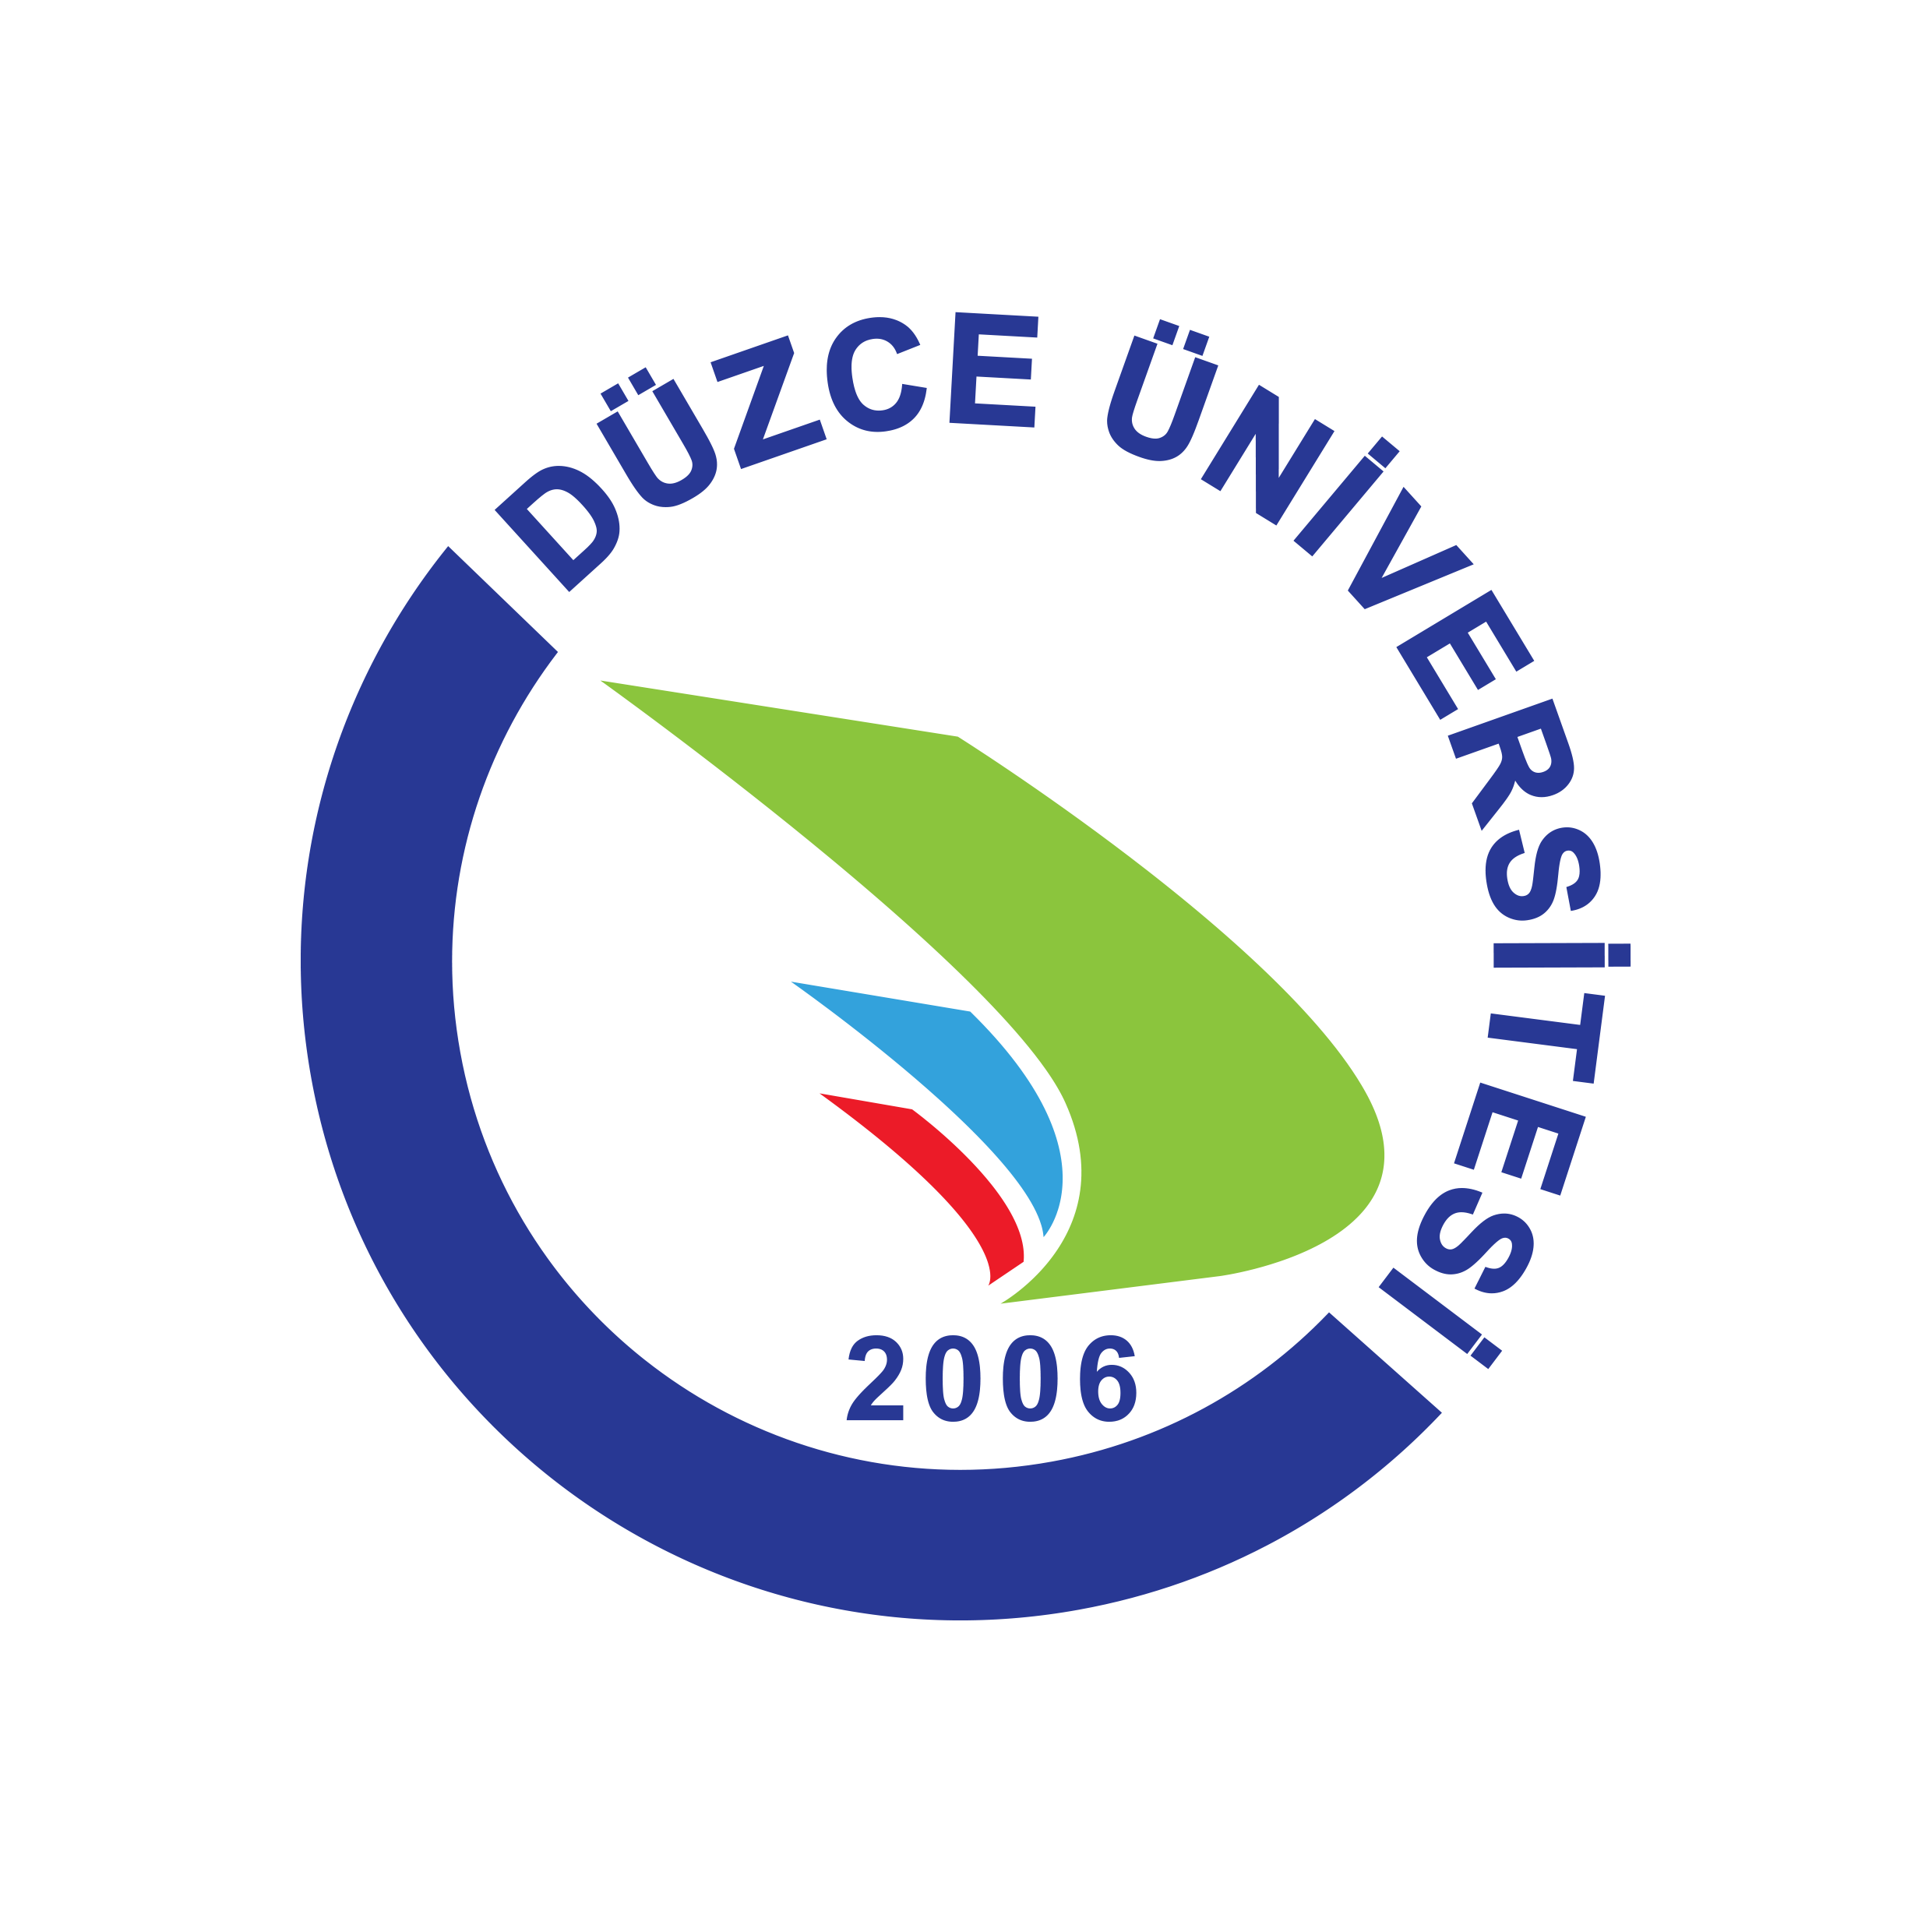 www.duzce.edu.tr